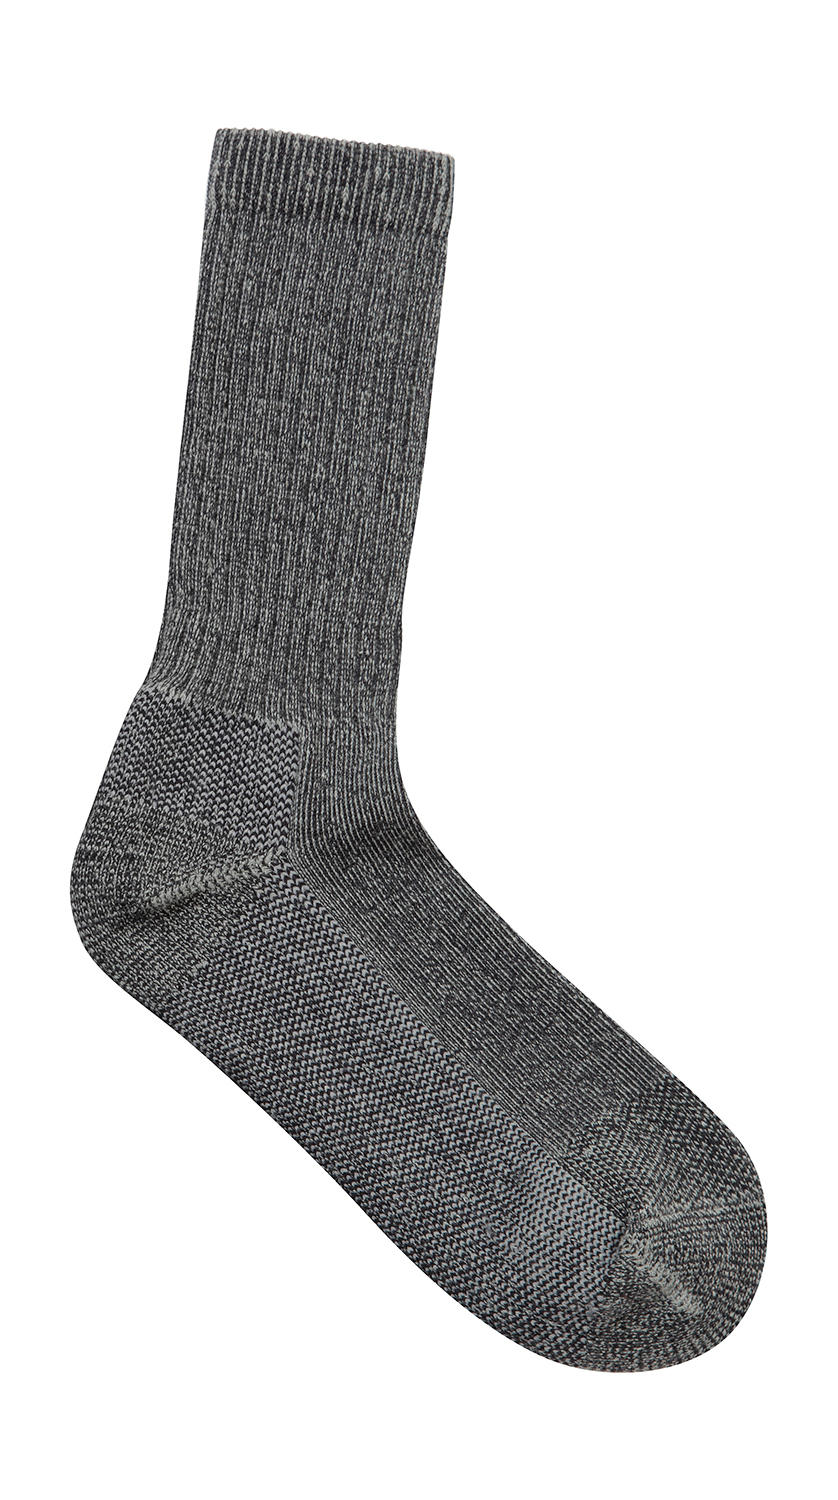  Work Gear Socks 3er Pack in Farbe Black/Melange Grey